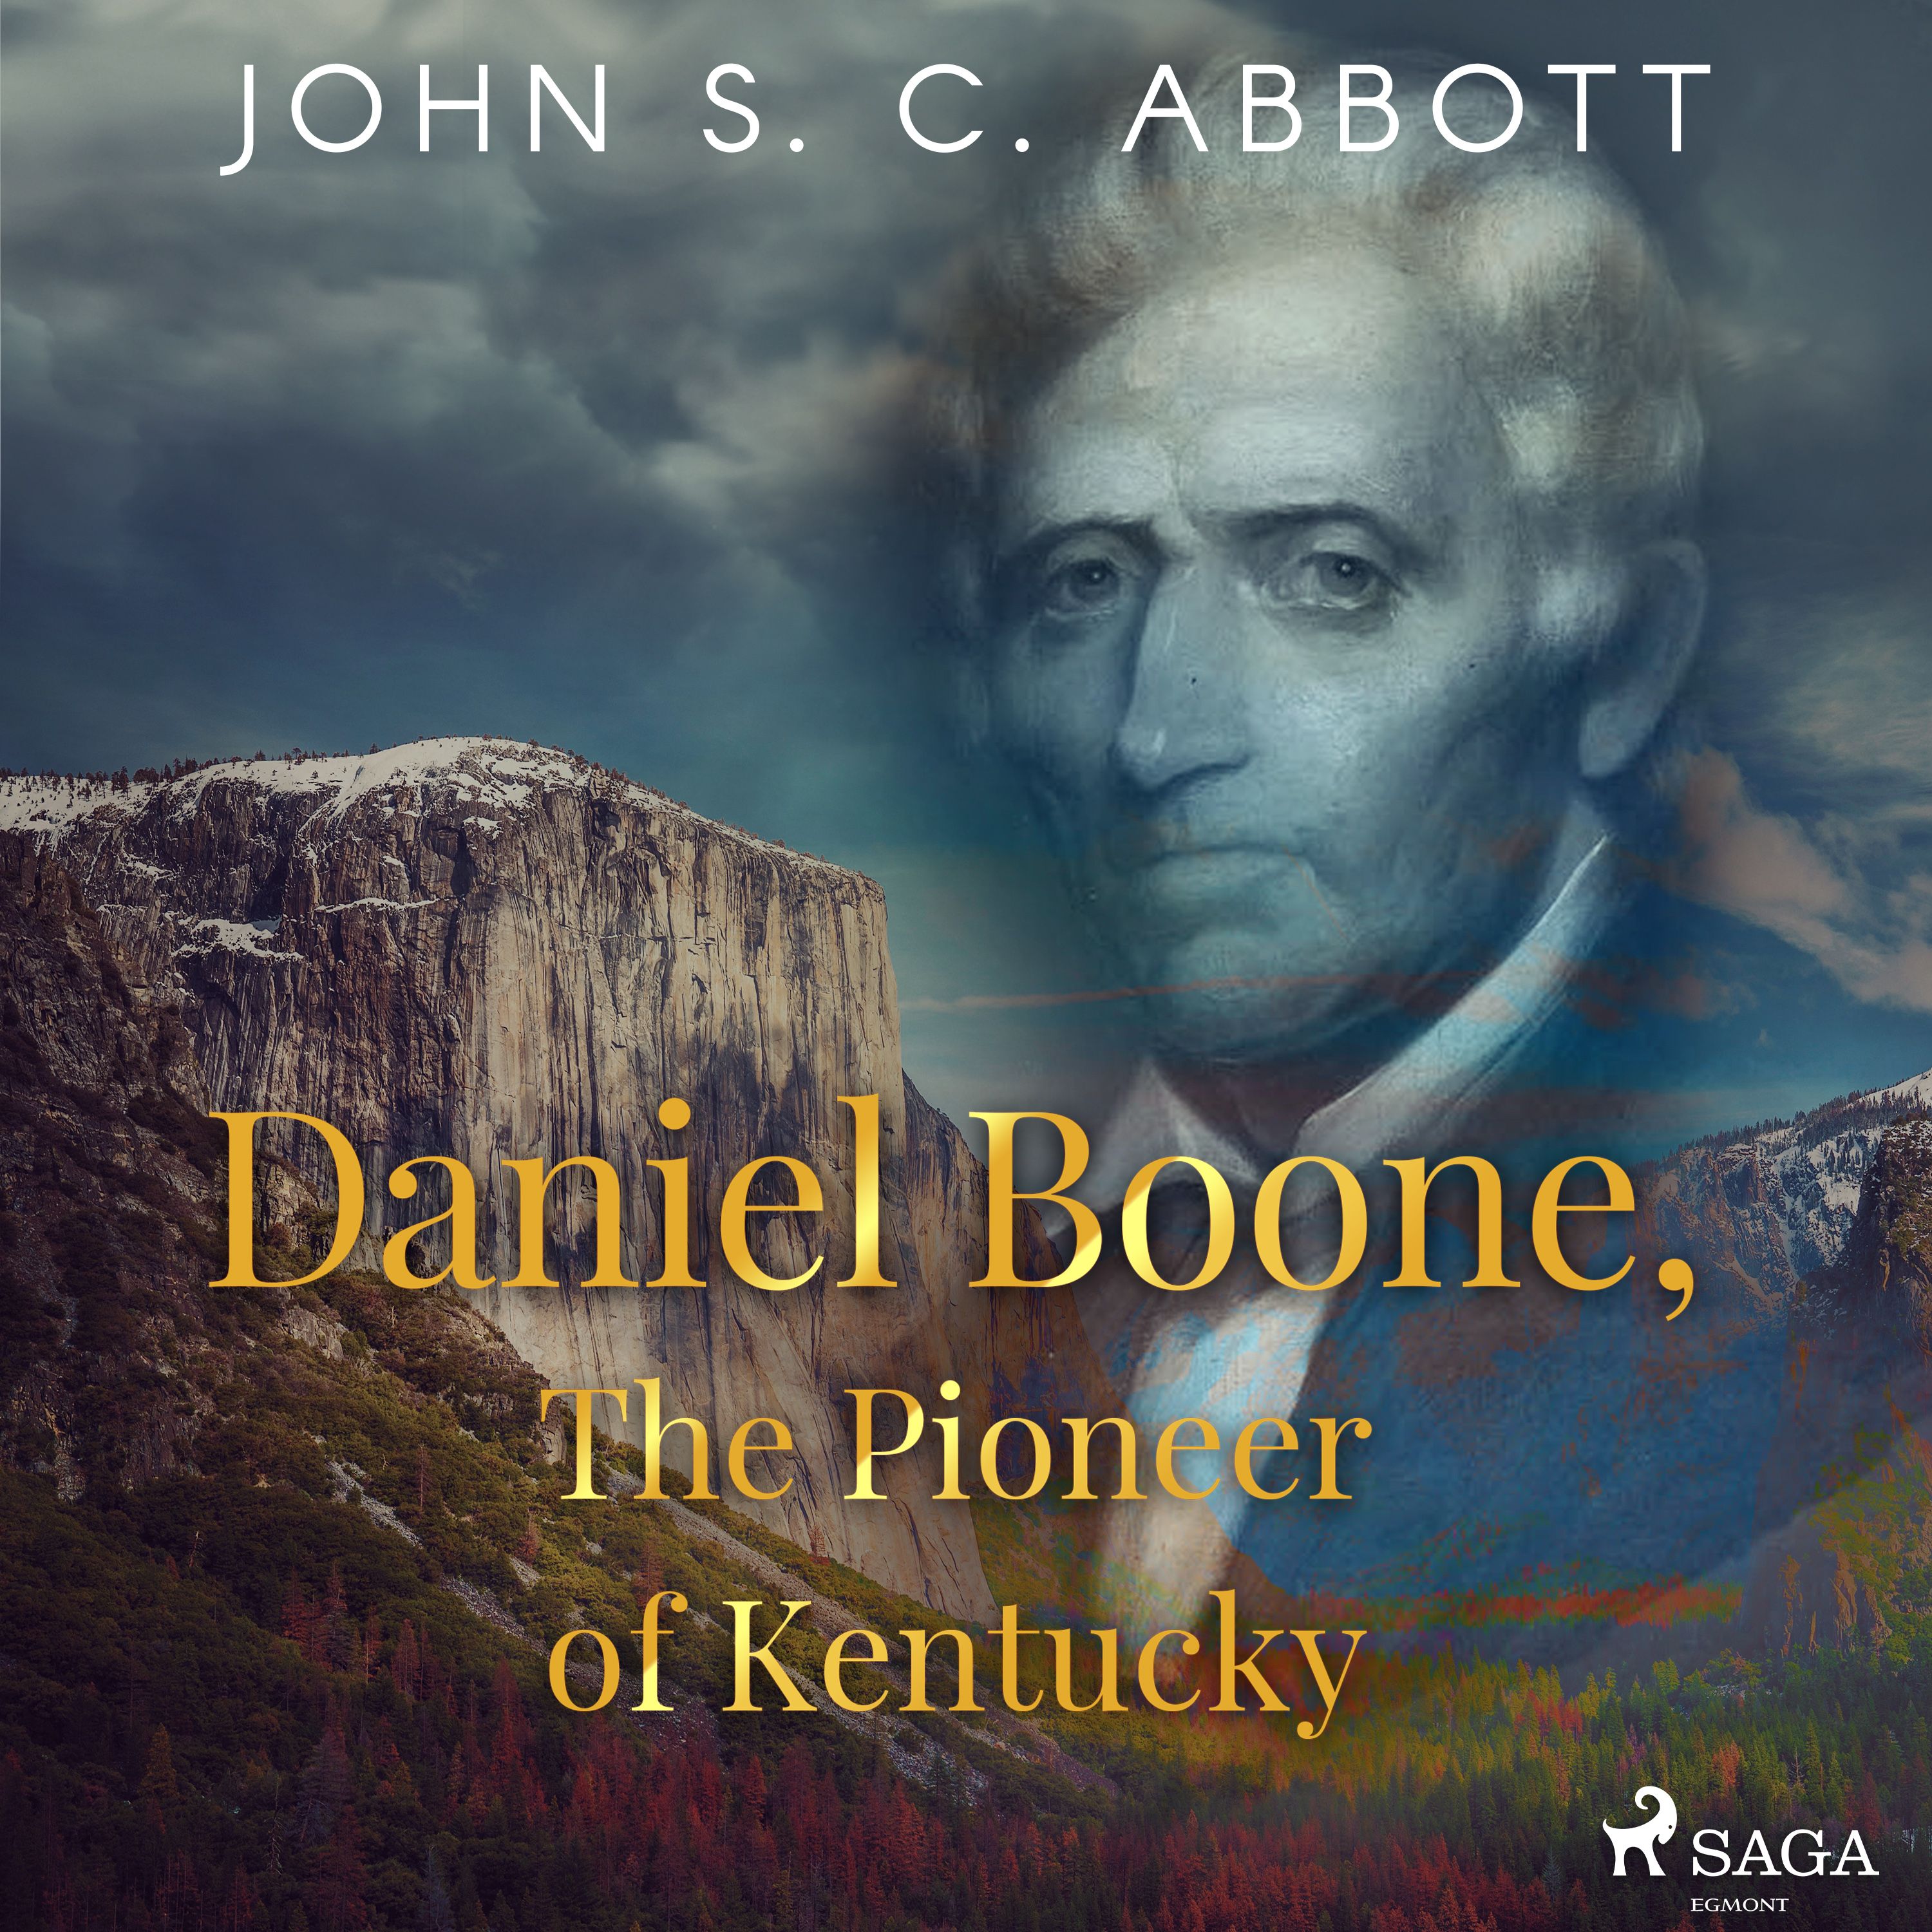 Daniel Boone, The Pioneer of Kentucky, lydbog af John S. C. Abbott